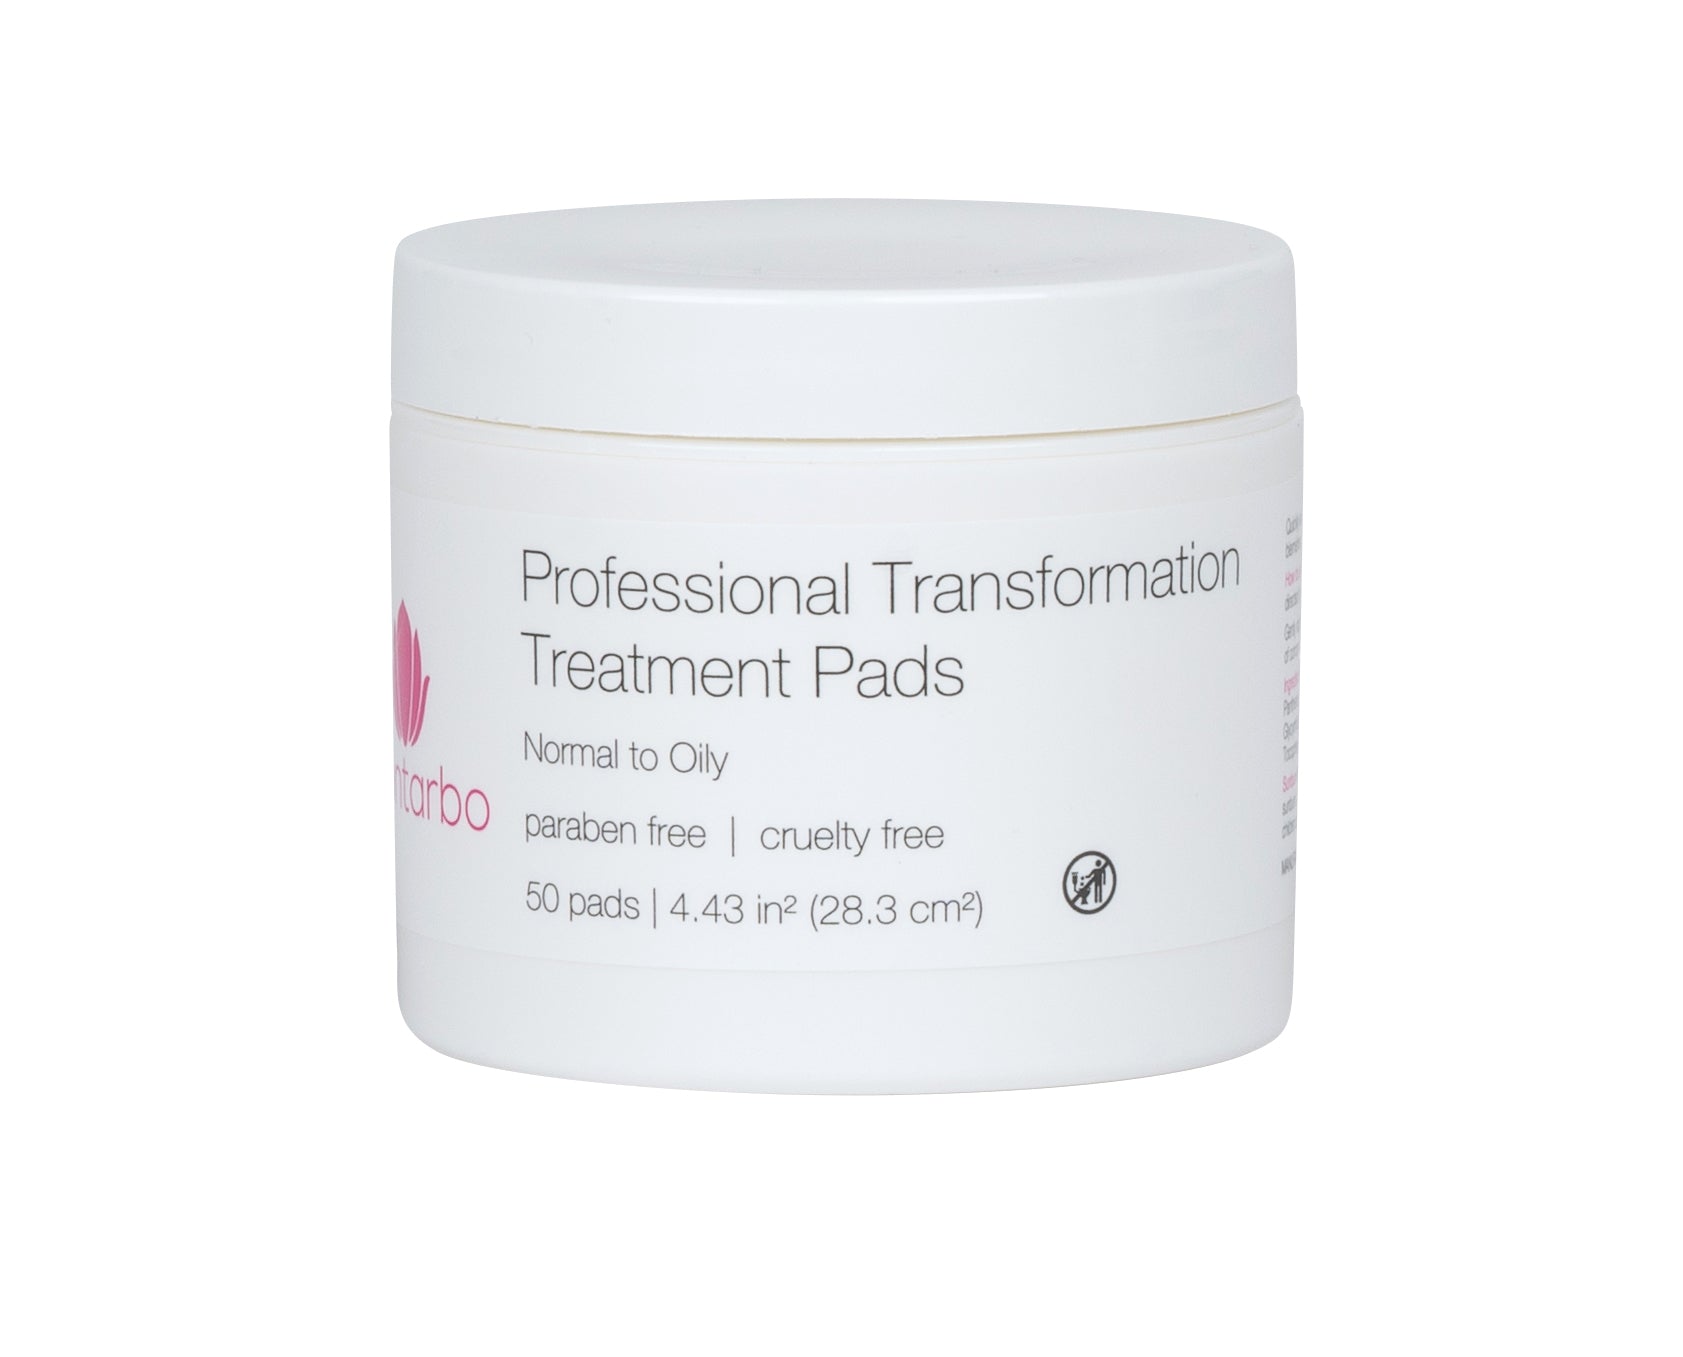 Professional Transformation Treatment Pads